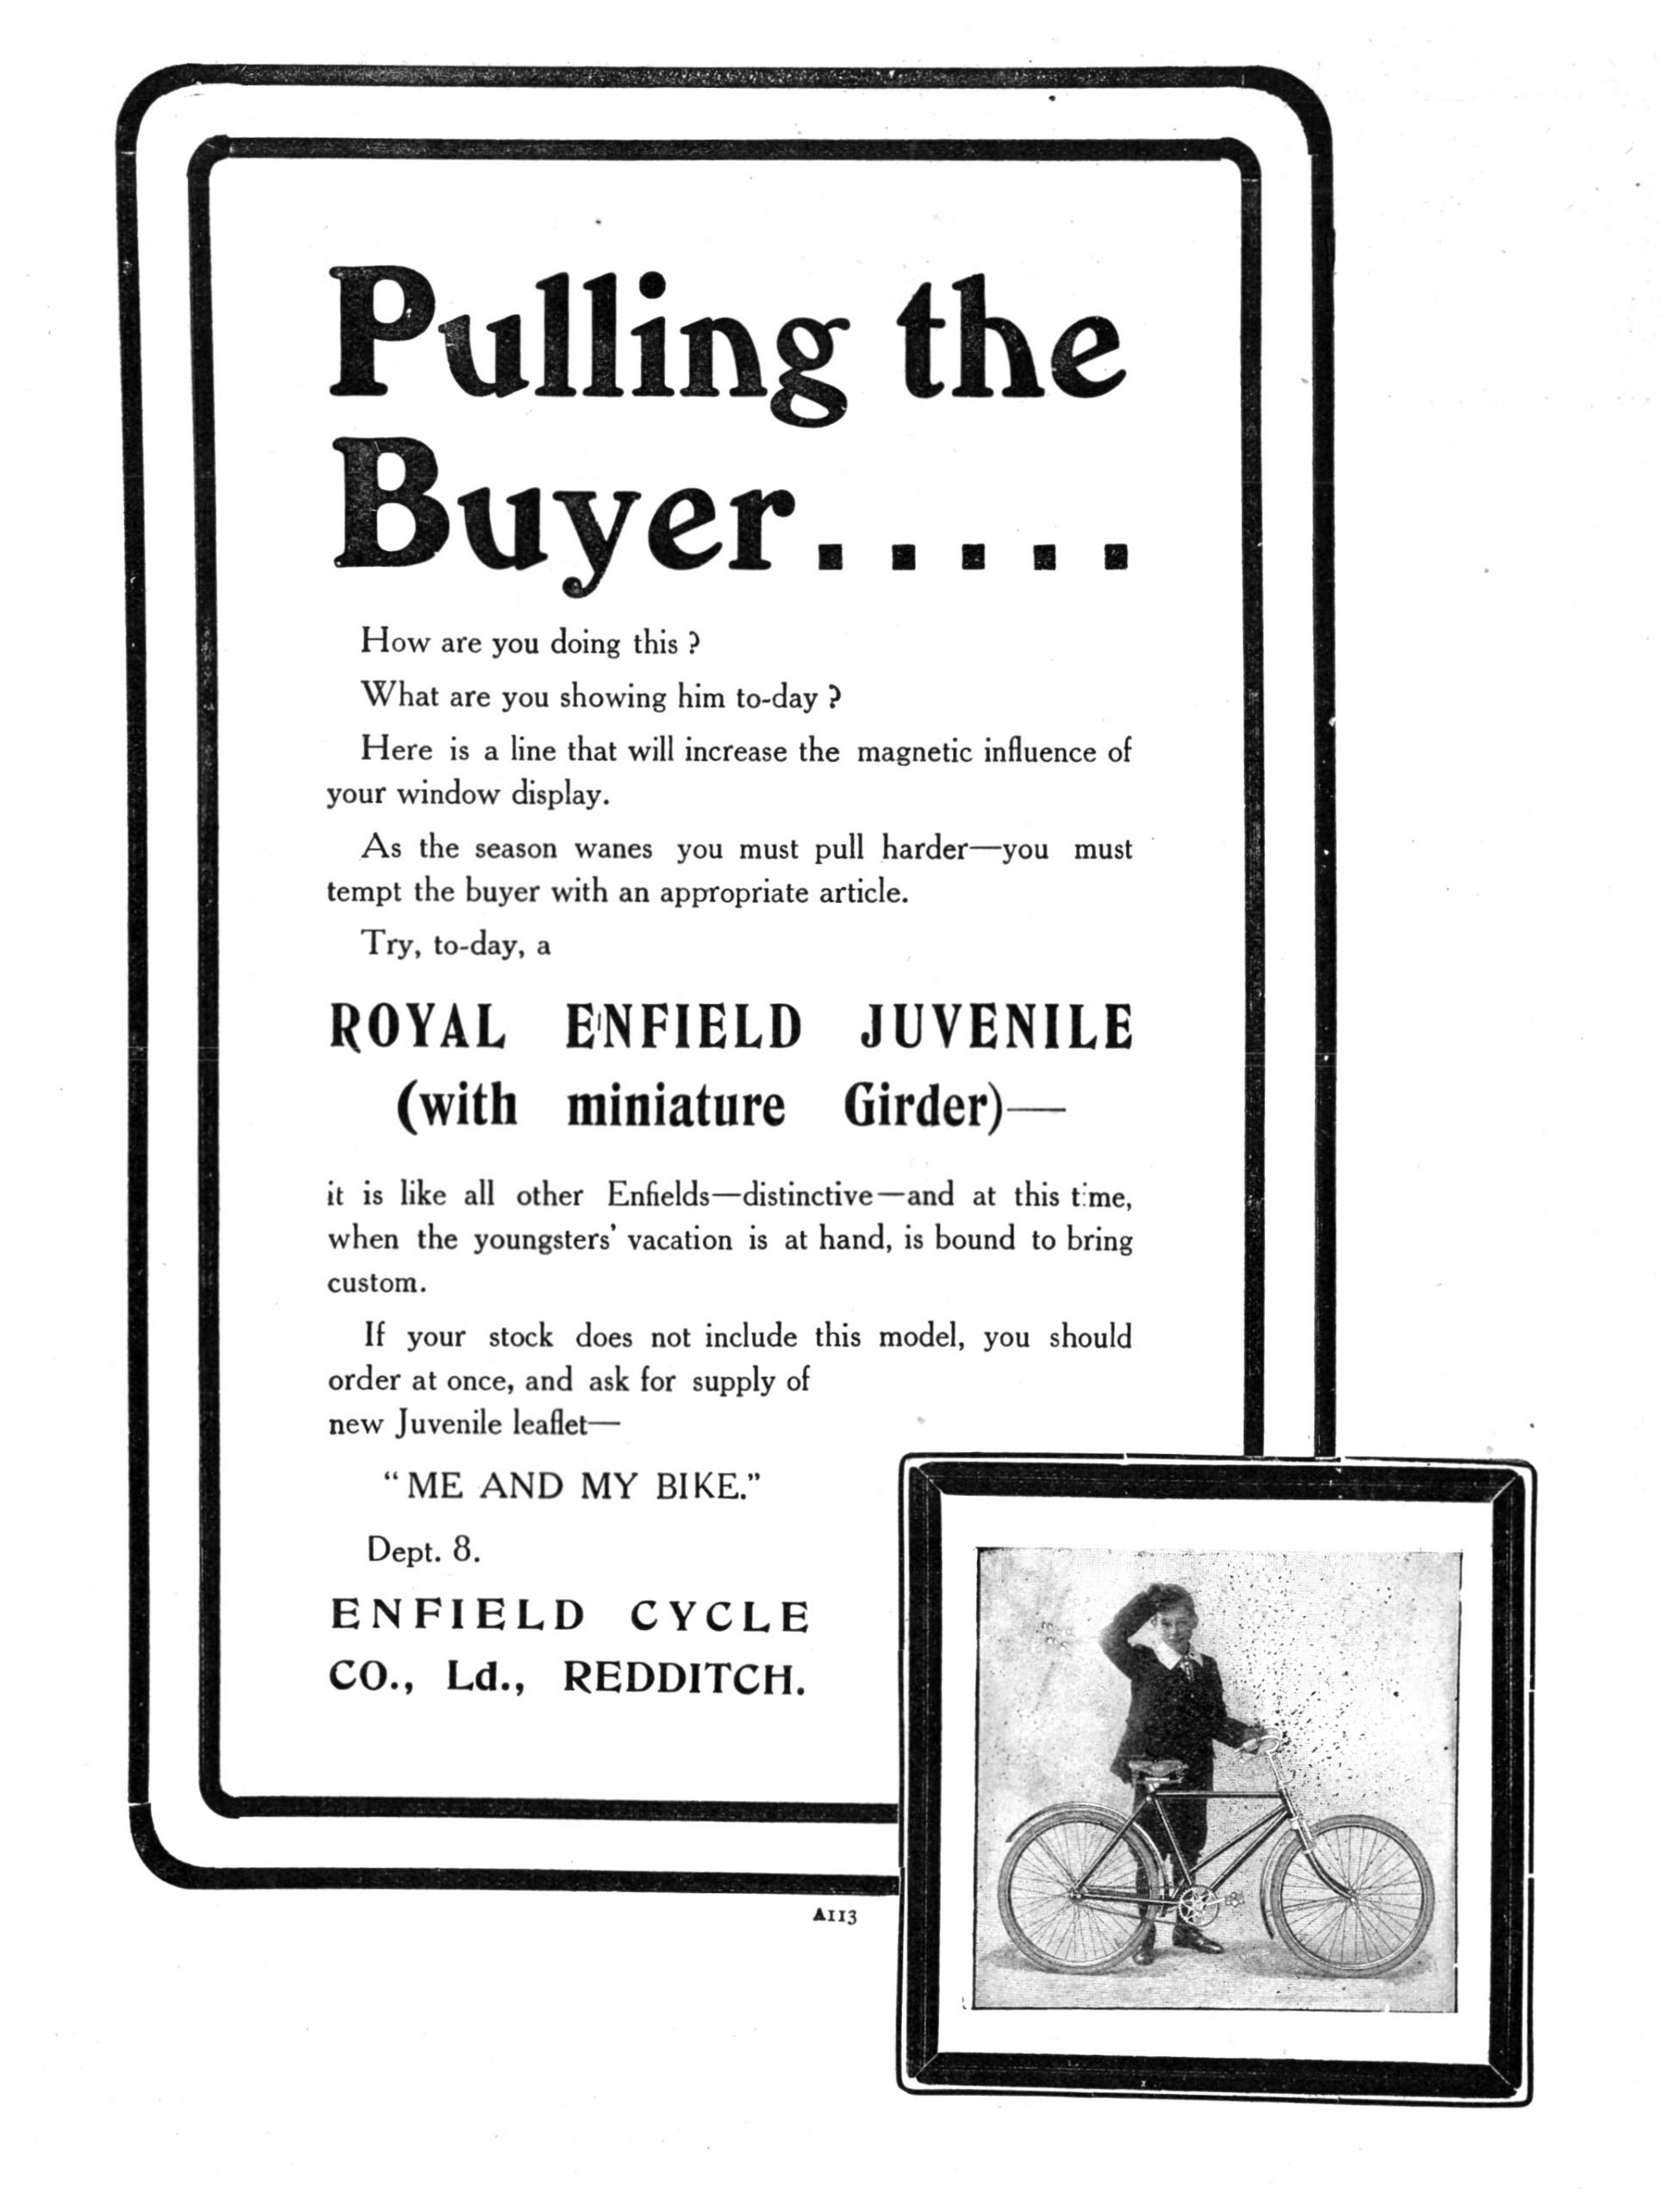 1906 Royal Enfield Bicycle Advert